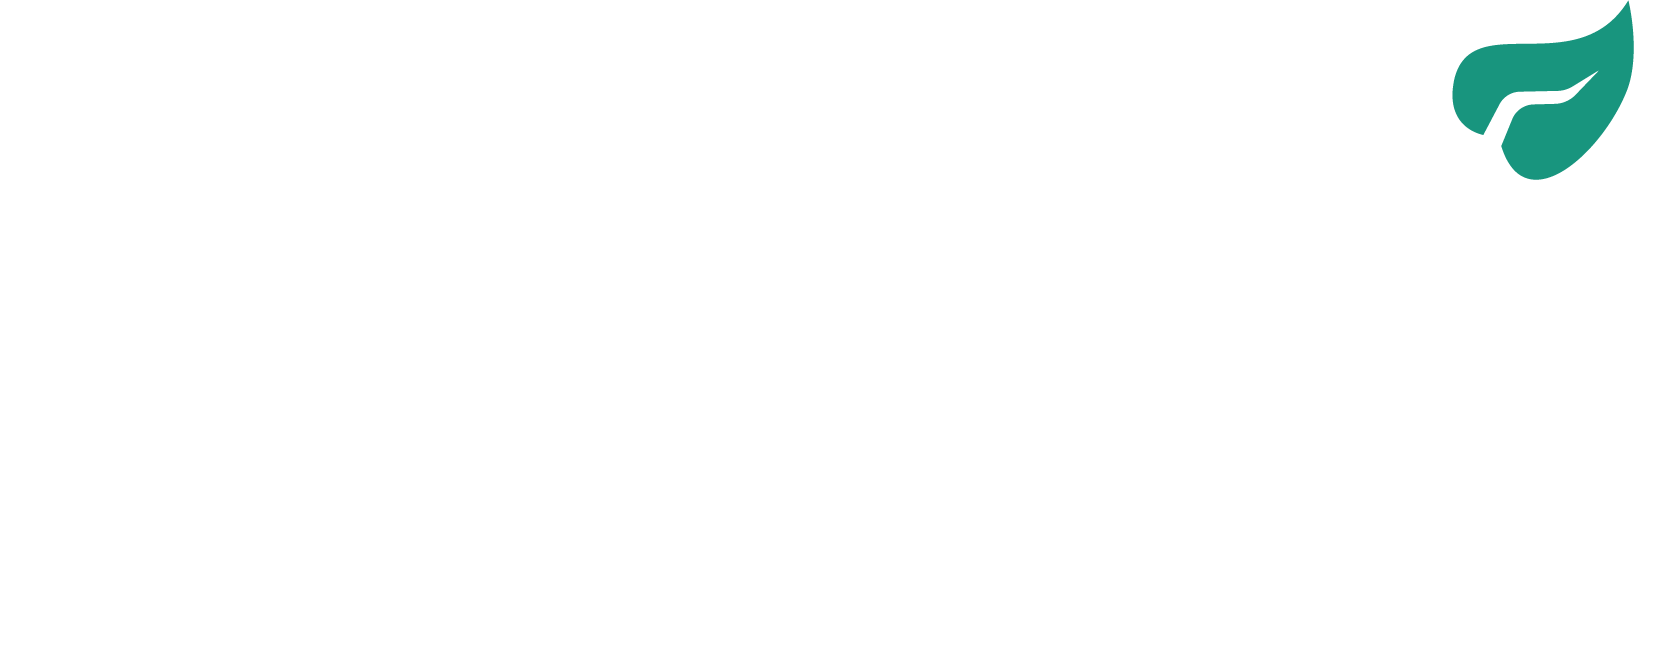 Logo Canopy conseil blanc